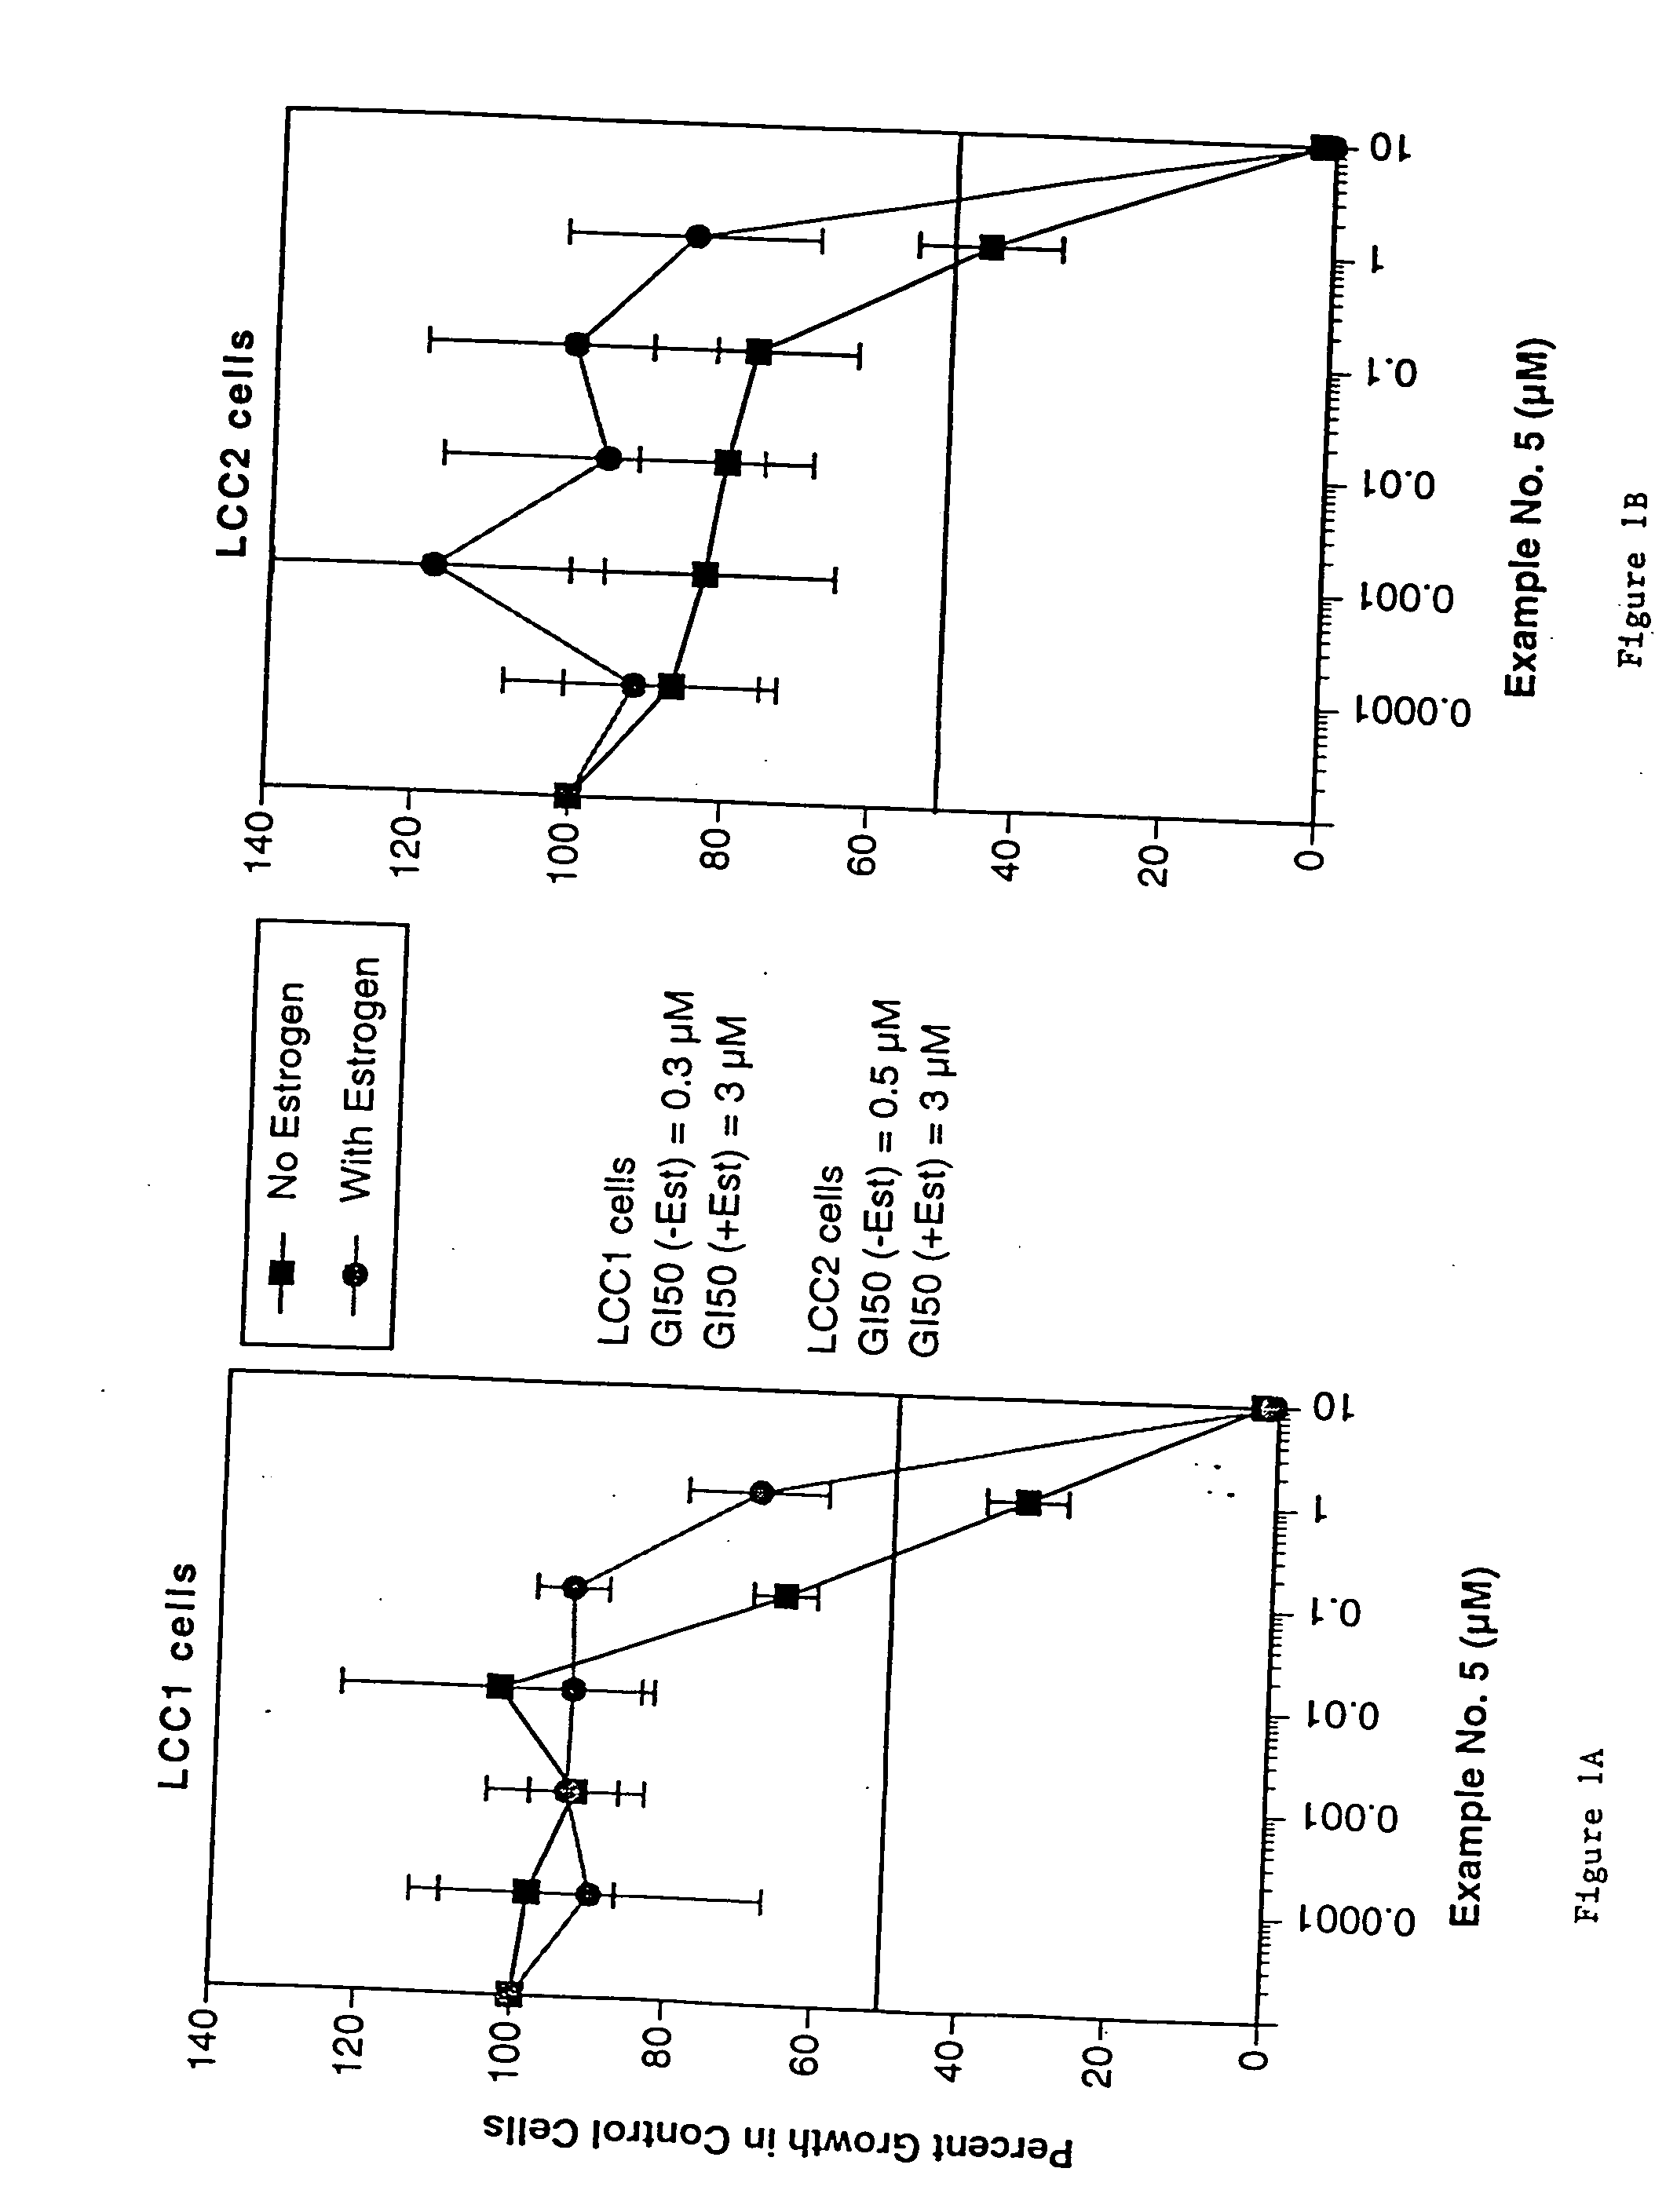 Compounds and methods for modulation of estrogen receptors